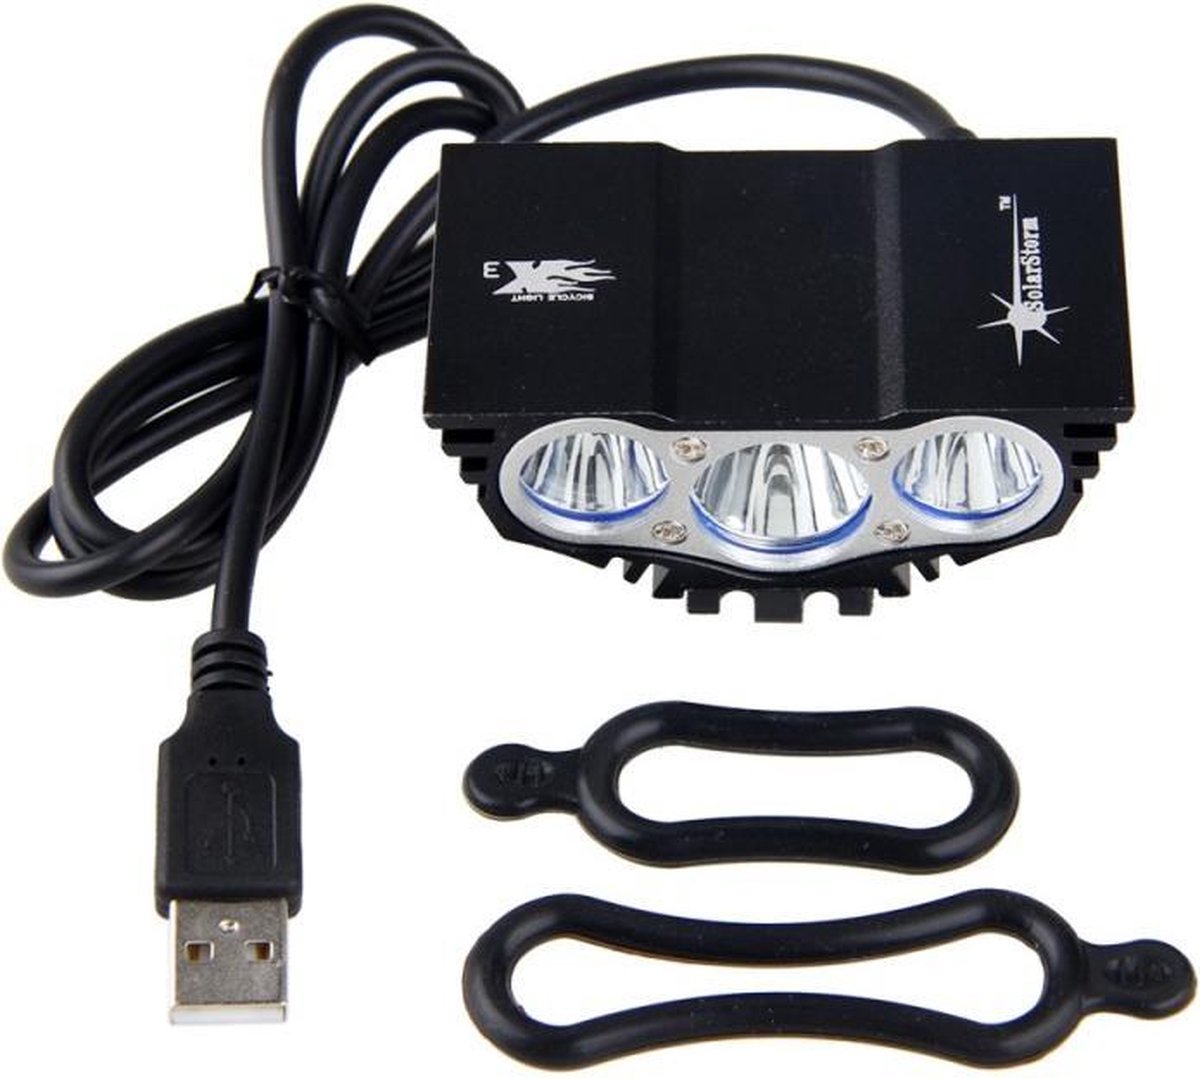 SolarStorm X3 USB MTB/race LED koplamp EXTREEM veel licht met 3x CREE T6 LED - USB aansluiting - (losse lamp zonder voeding)